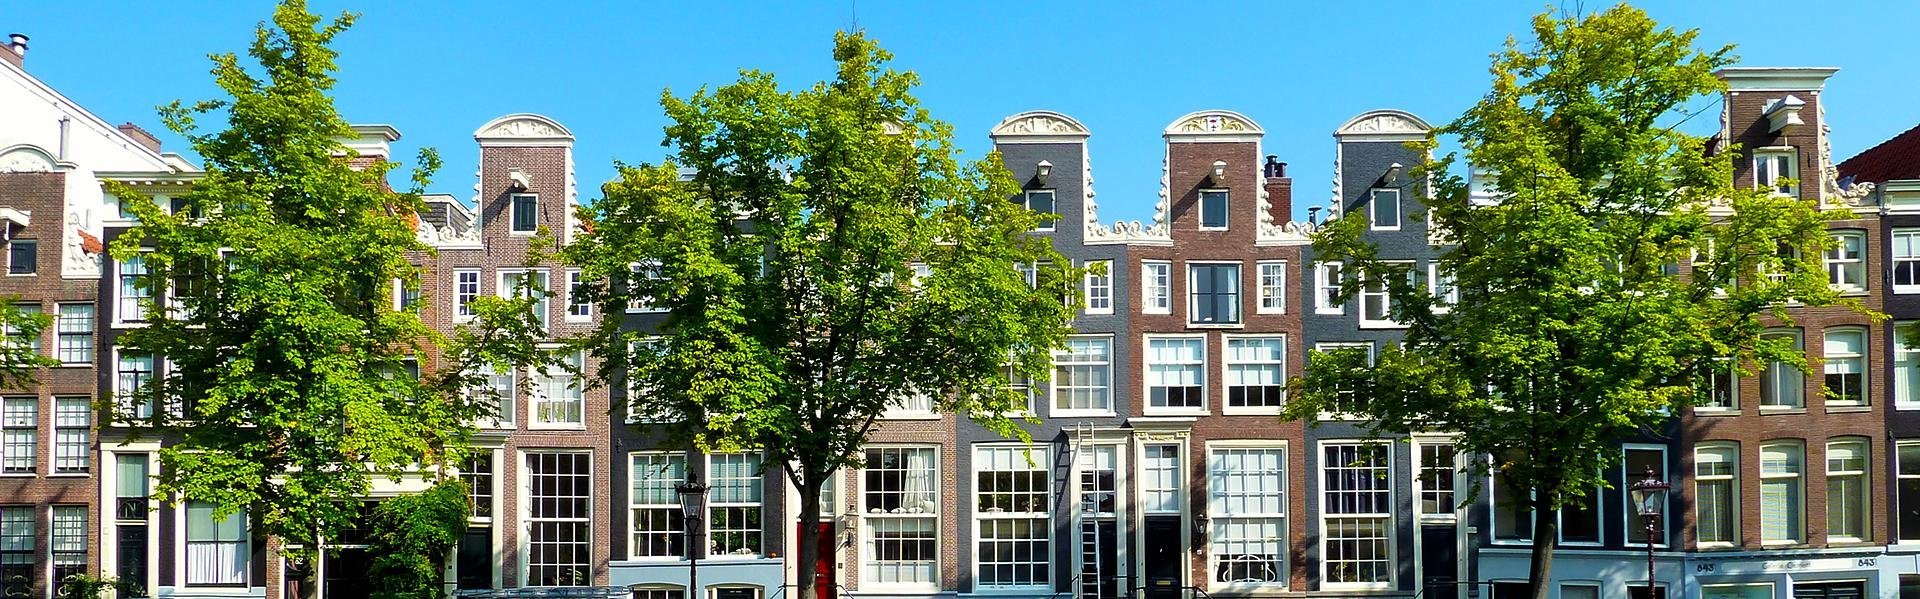 Amsterdam, Nederland